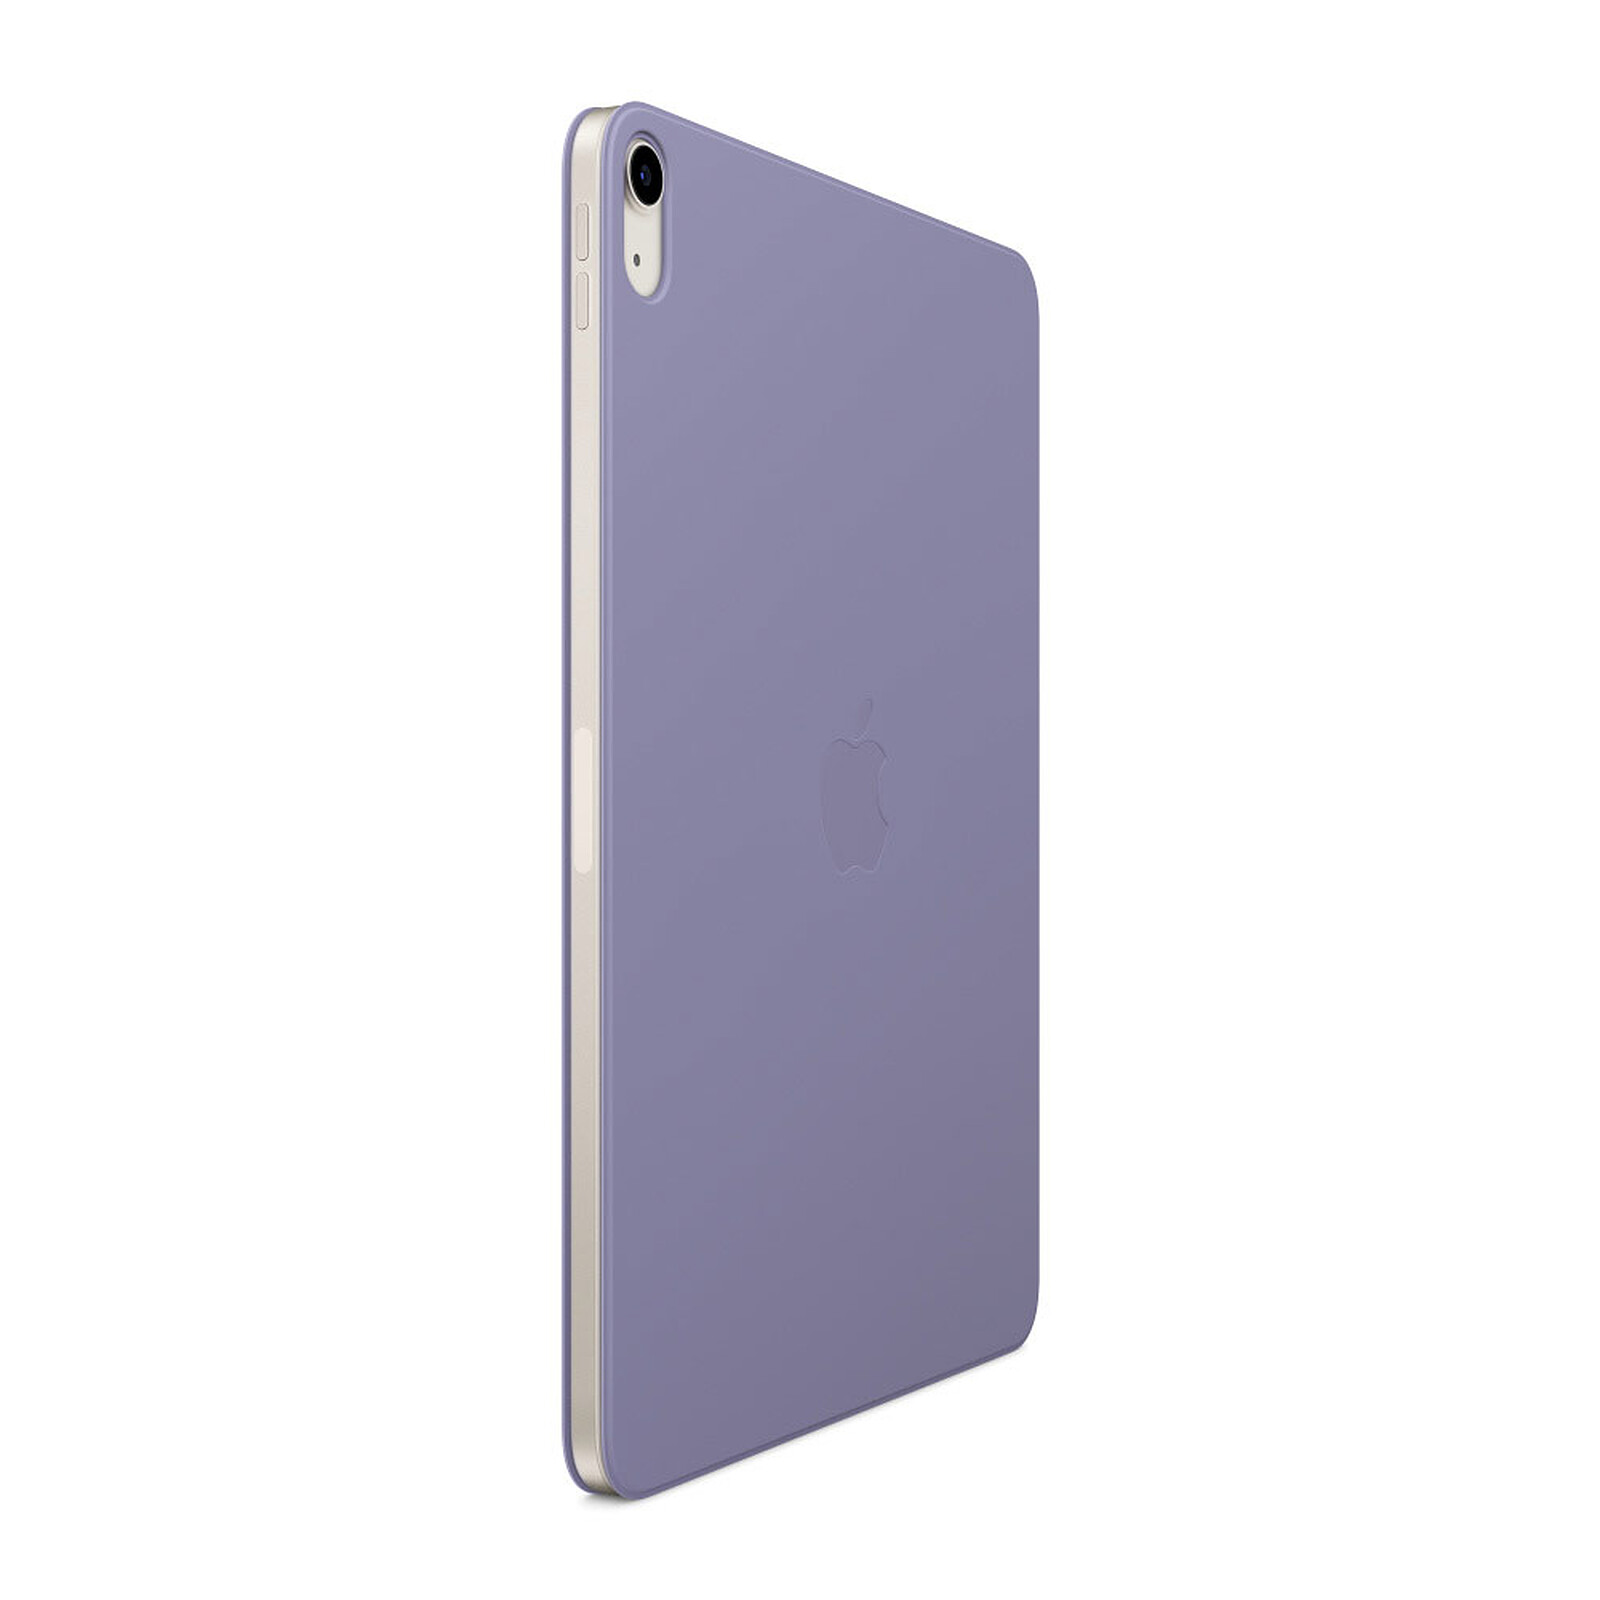 Etui Apple Smart Cover iPad mini - Blanc 2019, 5e Gen